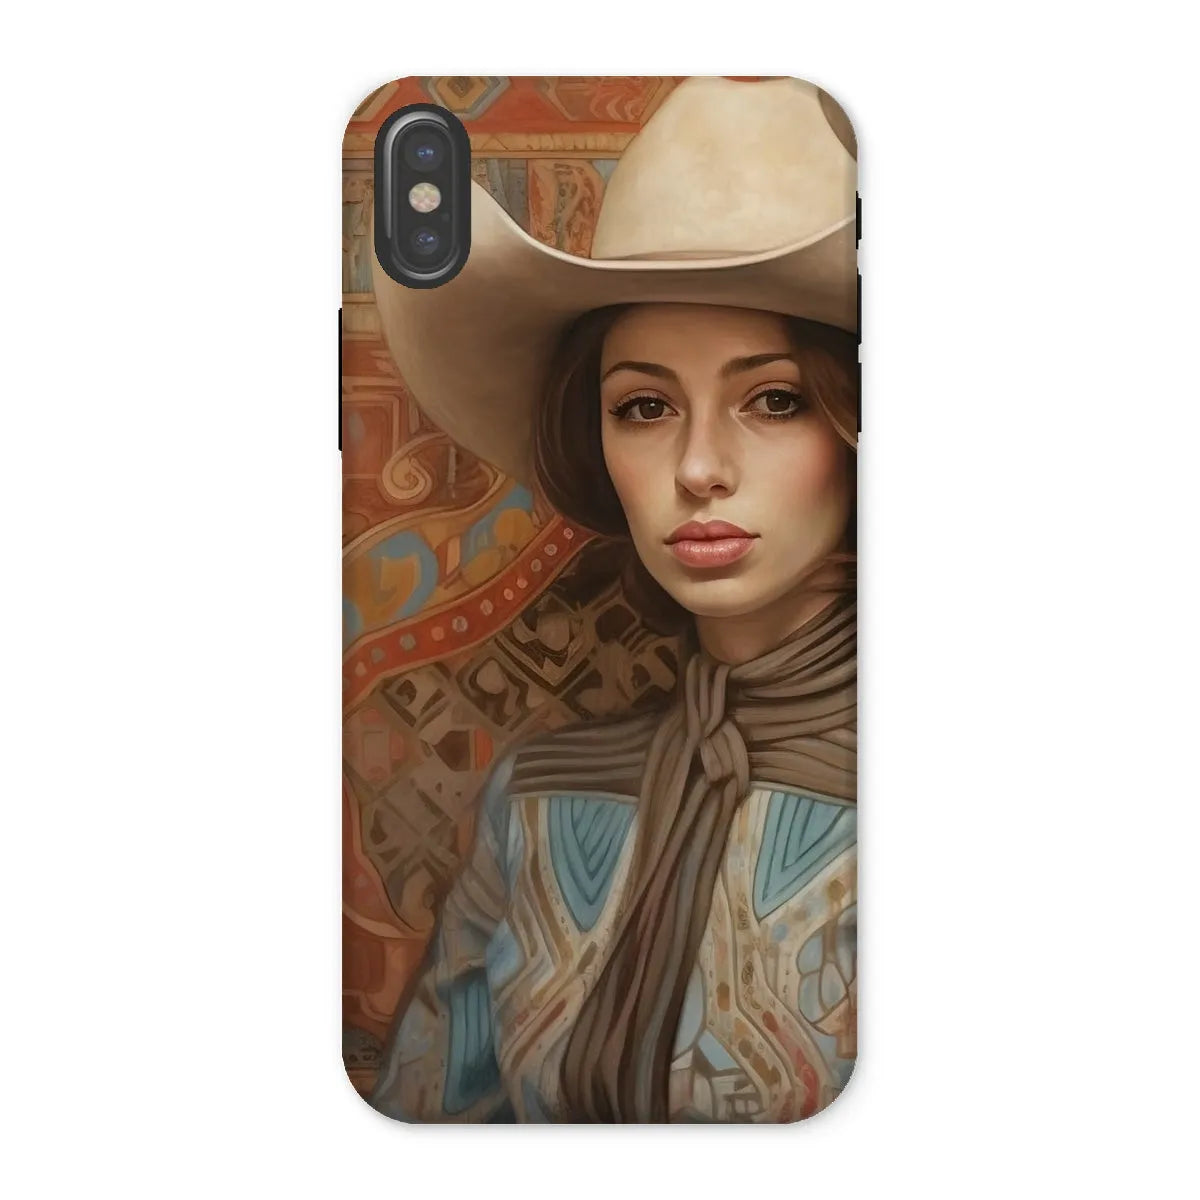 Anahita The Lesbian Cowgirl - Sapphic Art Phone Case - Iphone x / Matte - Mobile Phone Cases - Aesthetic Art